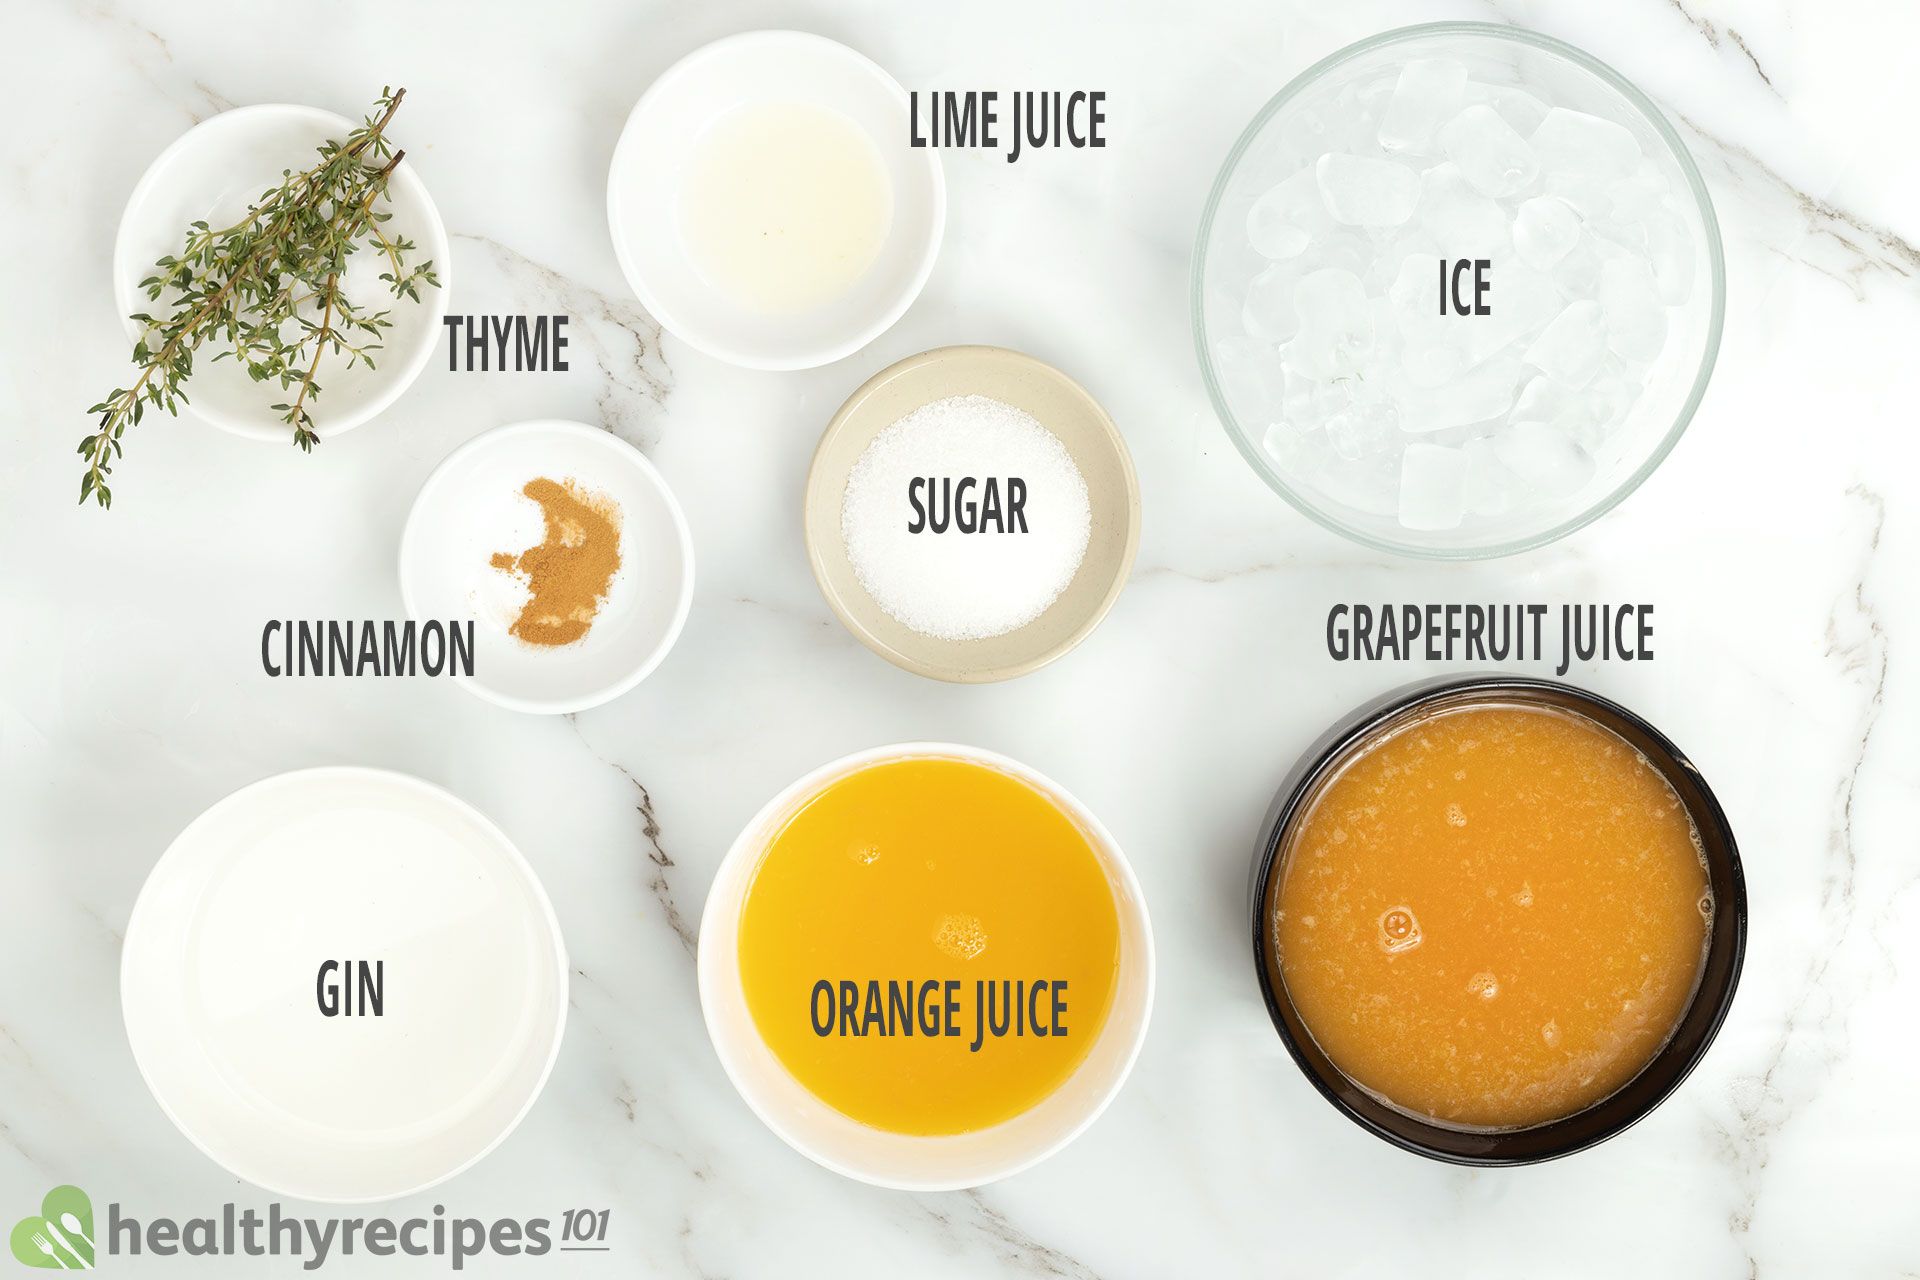 Gin and Grapefruit Juice Ingredients